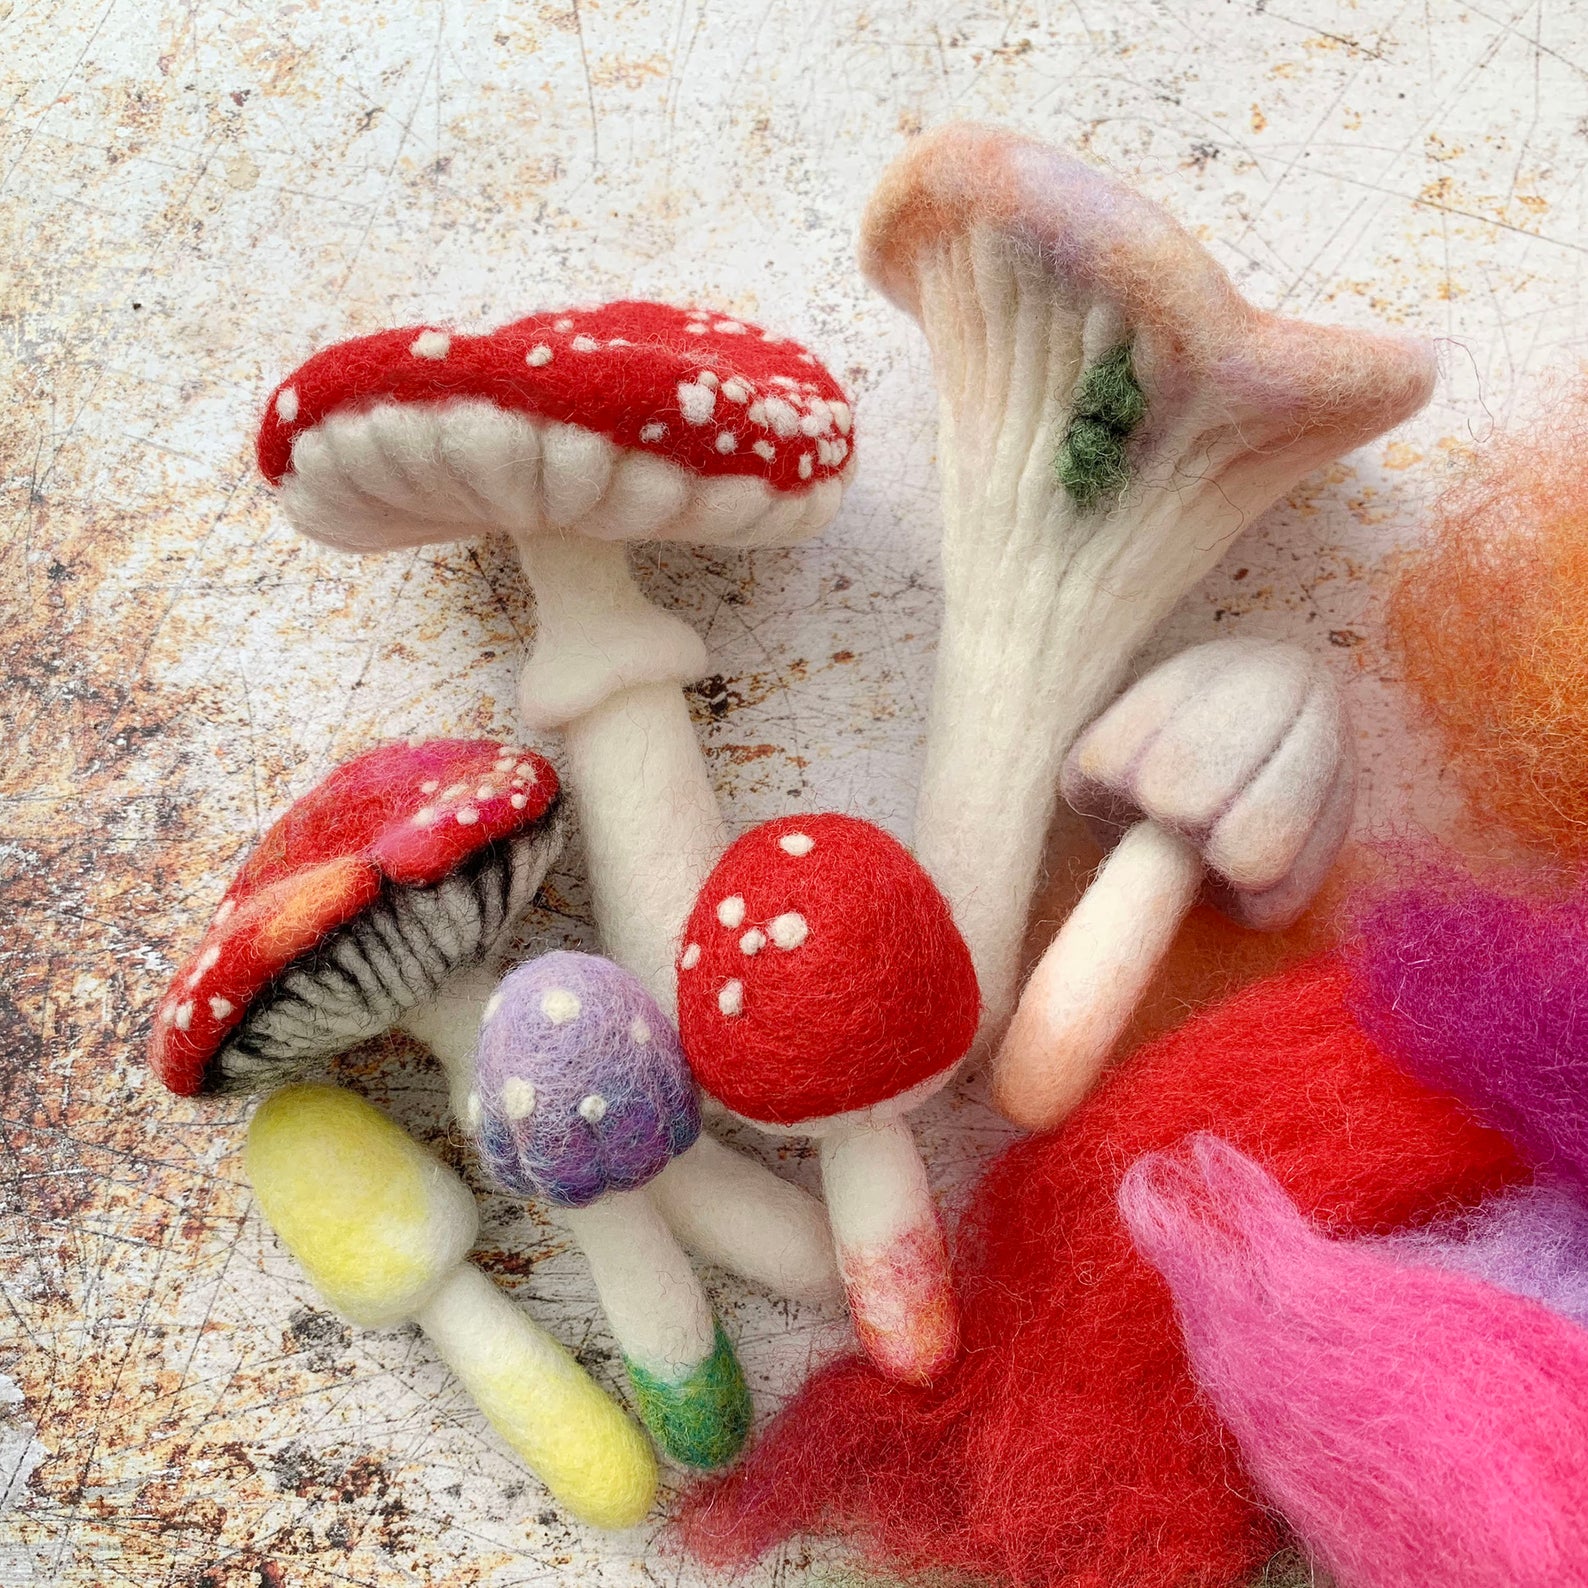 Beginner Punch Needle Embroidery DIY Kit Mushroom Toadstool Needle Punching  DIY Craft Kit Mushroom Decor 2 Color Choices 